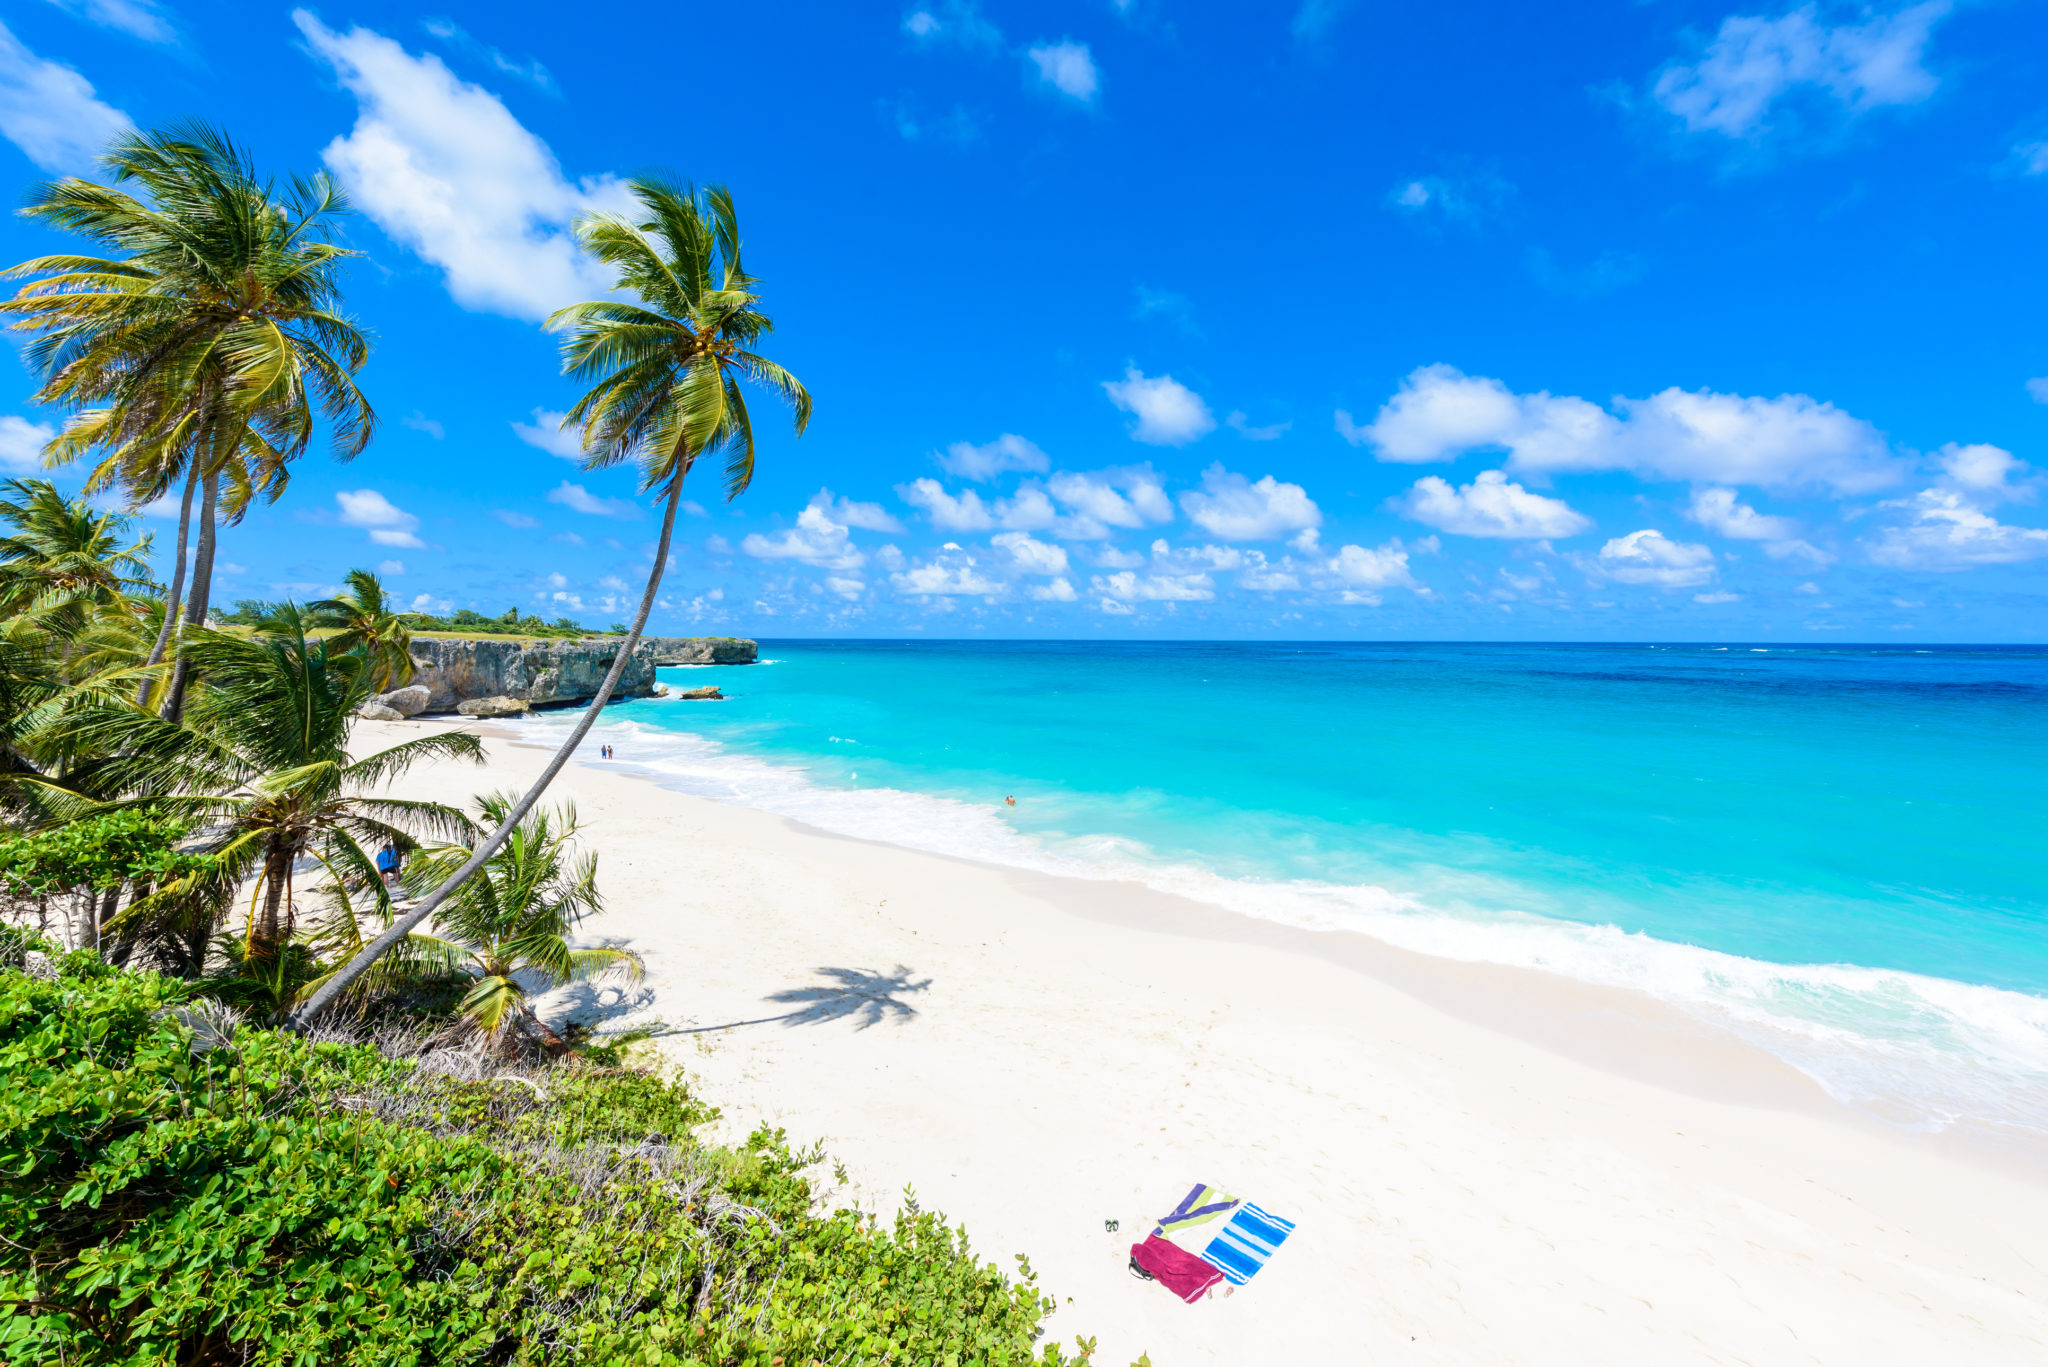 Urlaub auf Barbados - Das fantastische Tropenparadies